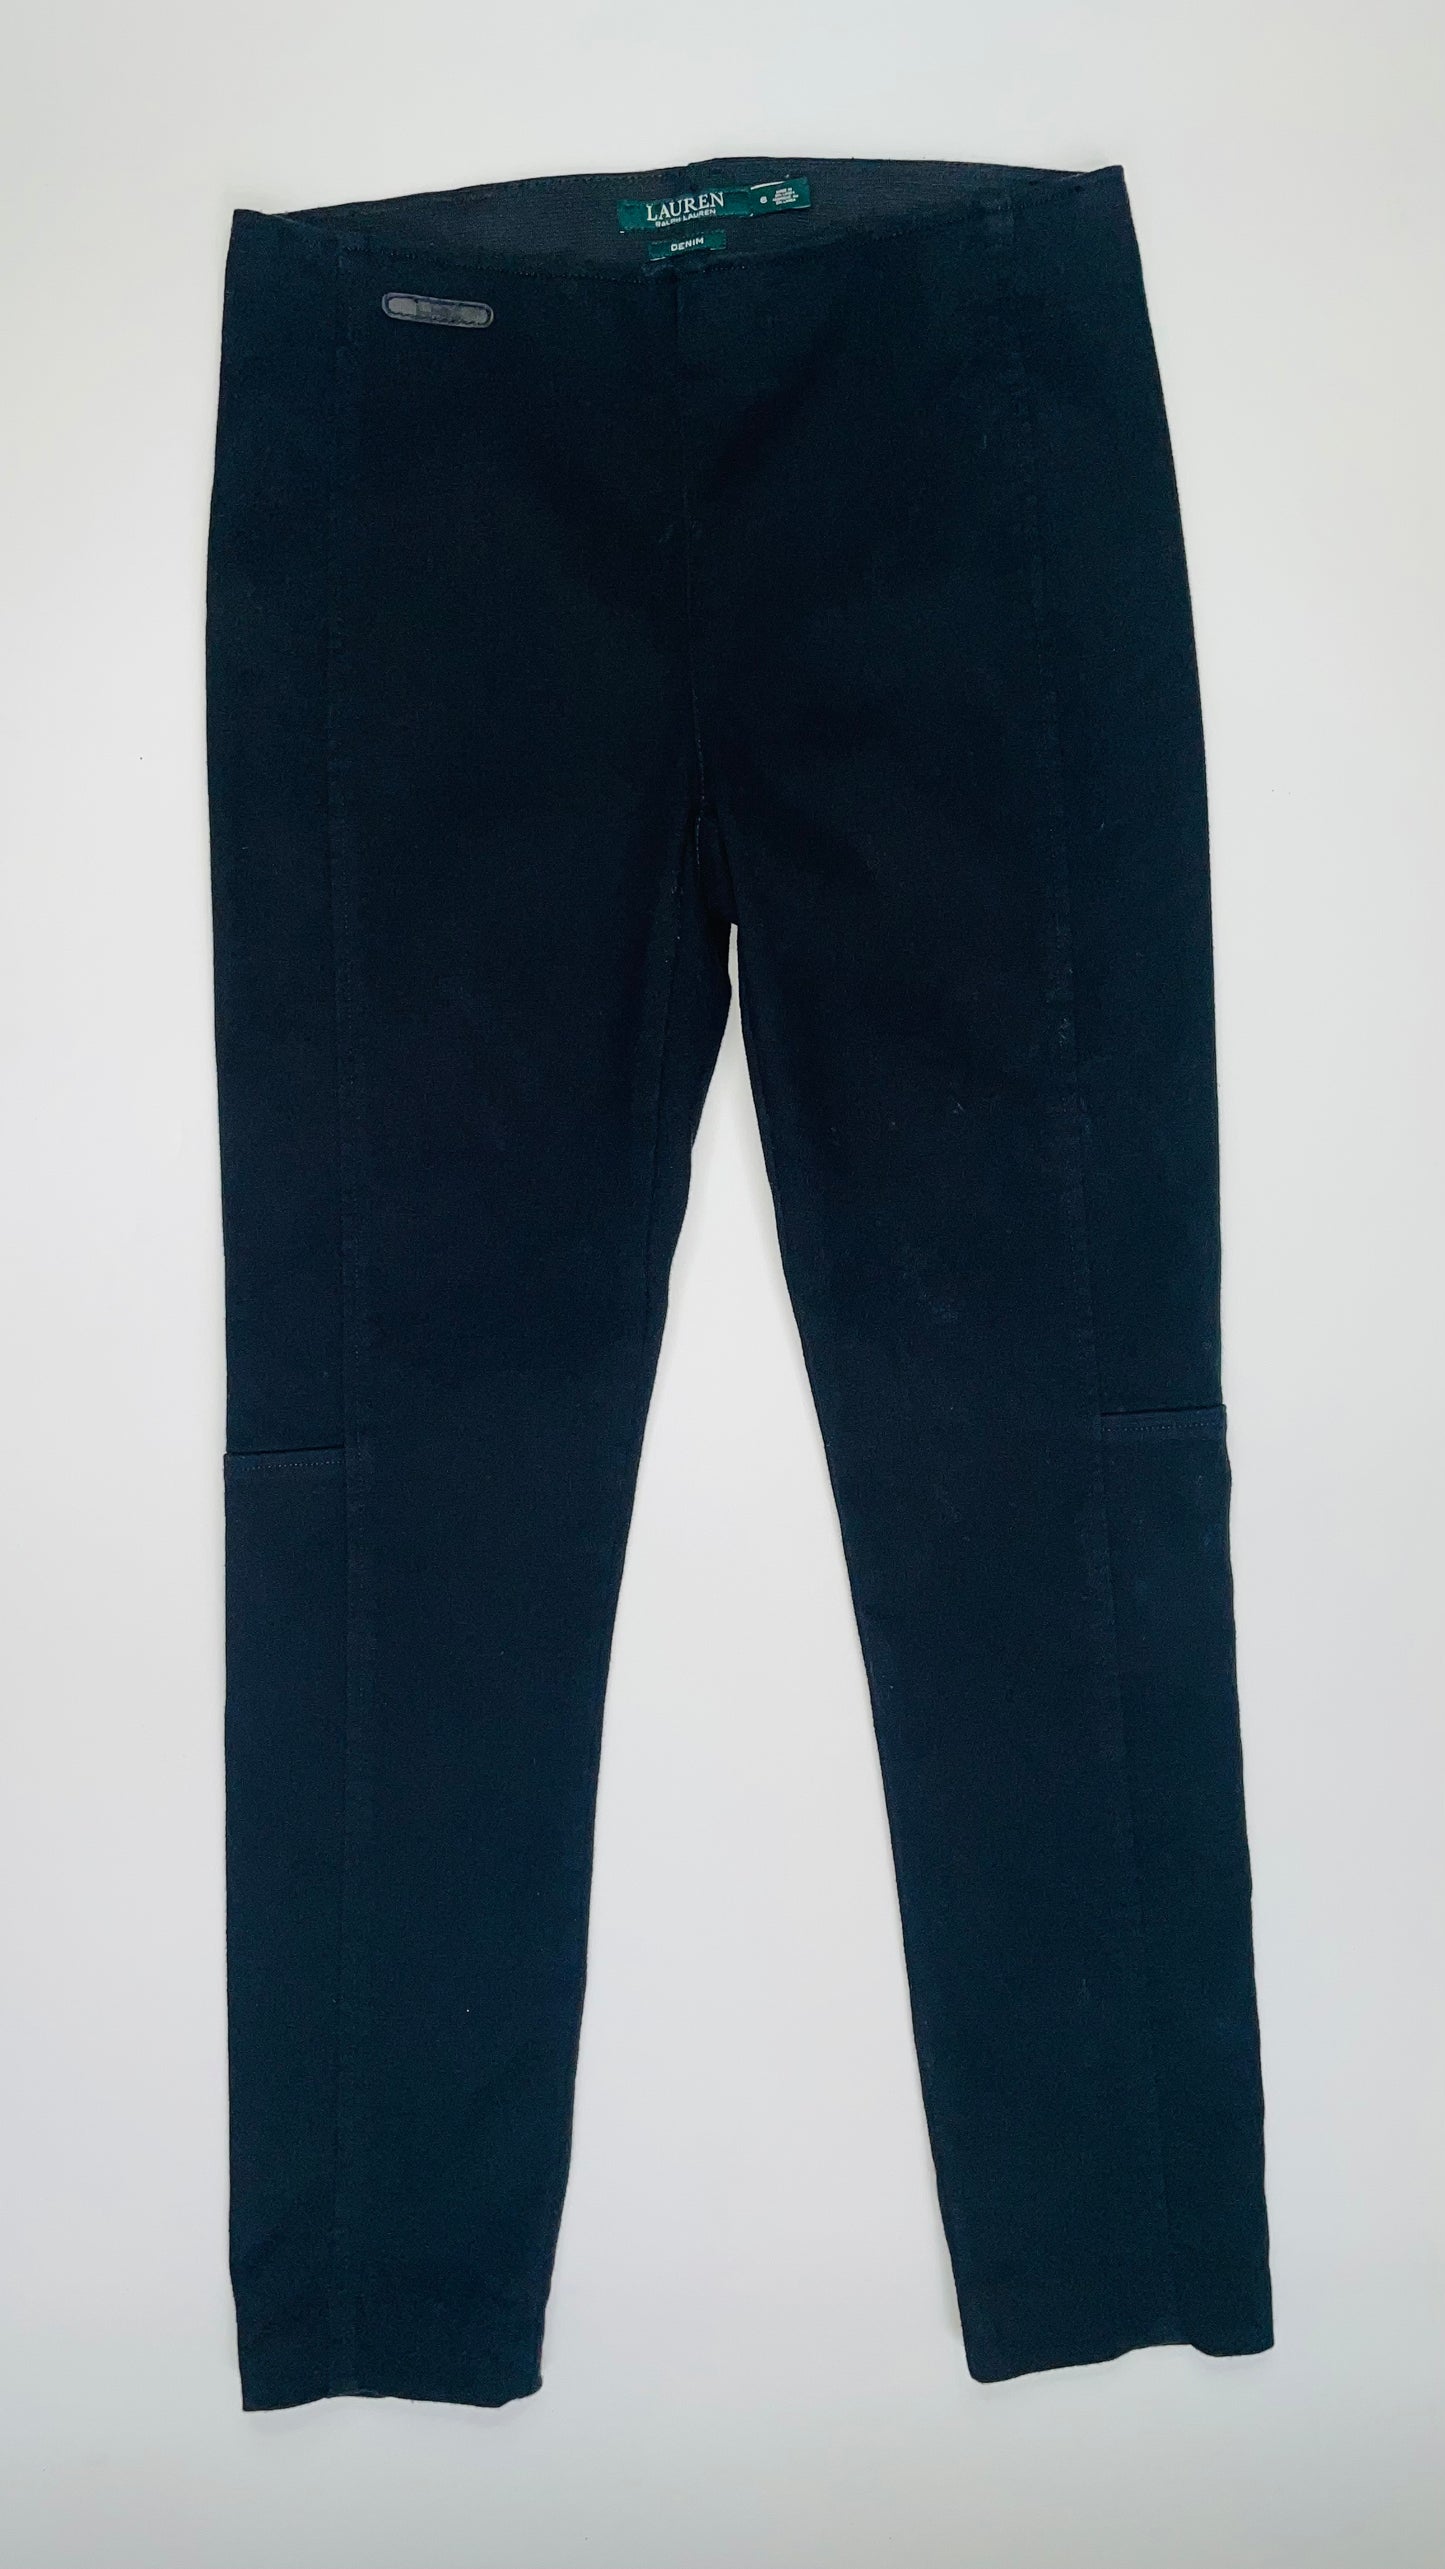 Vintage Lauren Ralph Lauren black denim knit tights - Size 6